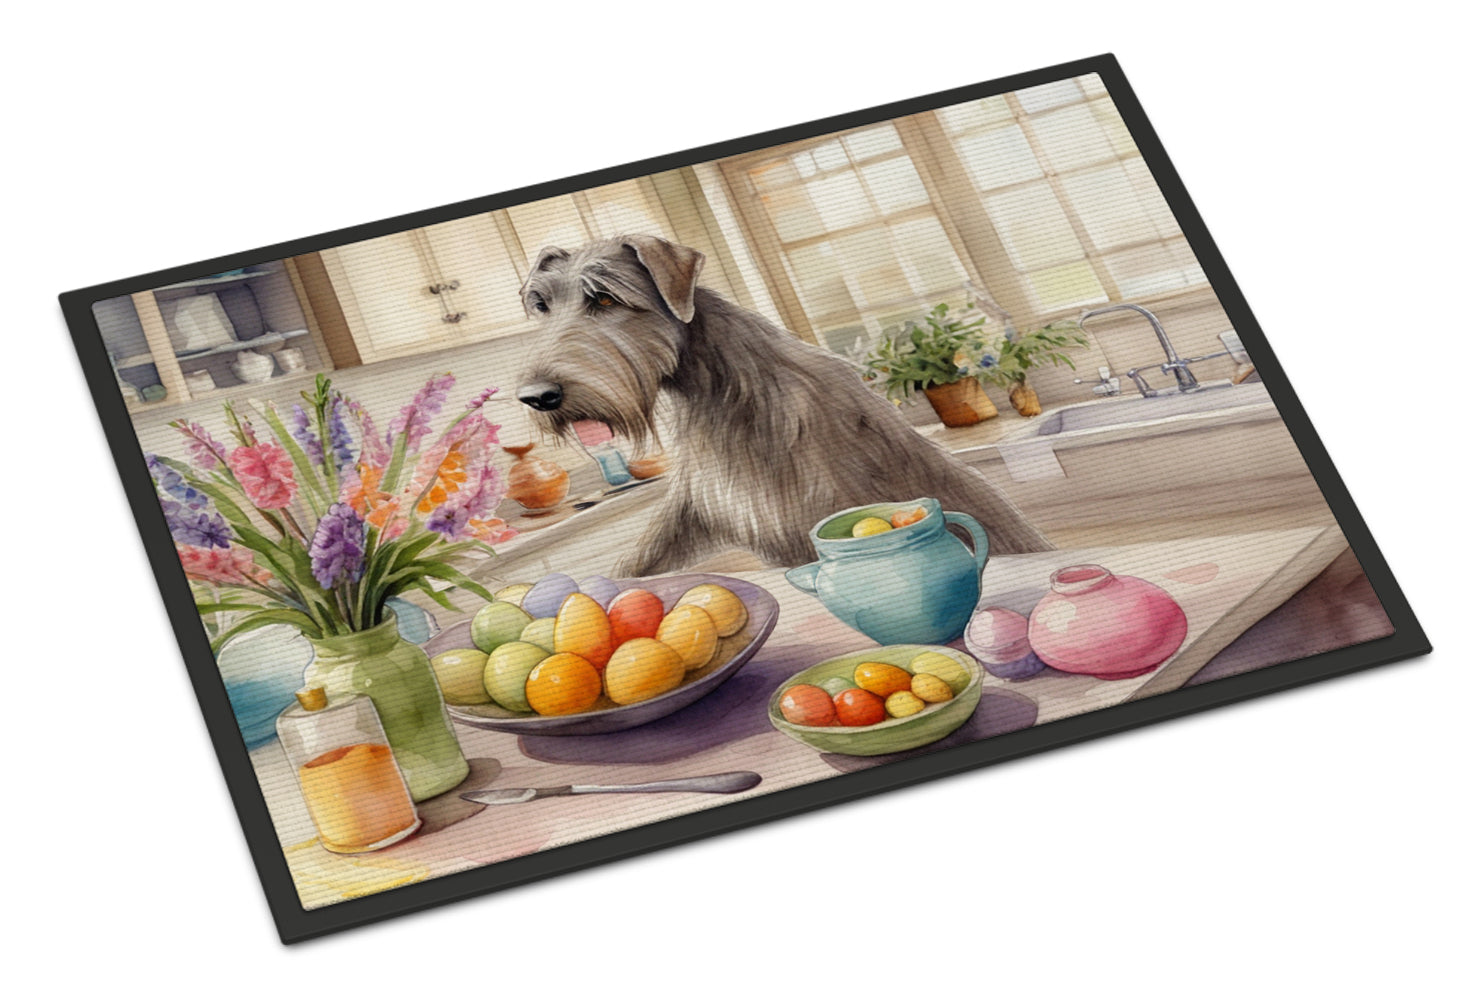 Buy this Decorating Easter Irish Wolfhound Doormat